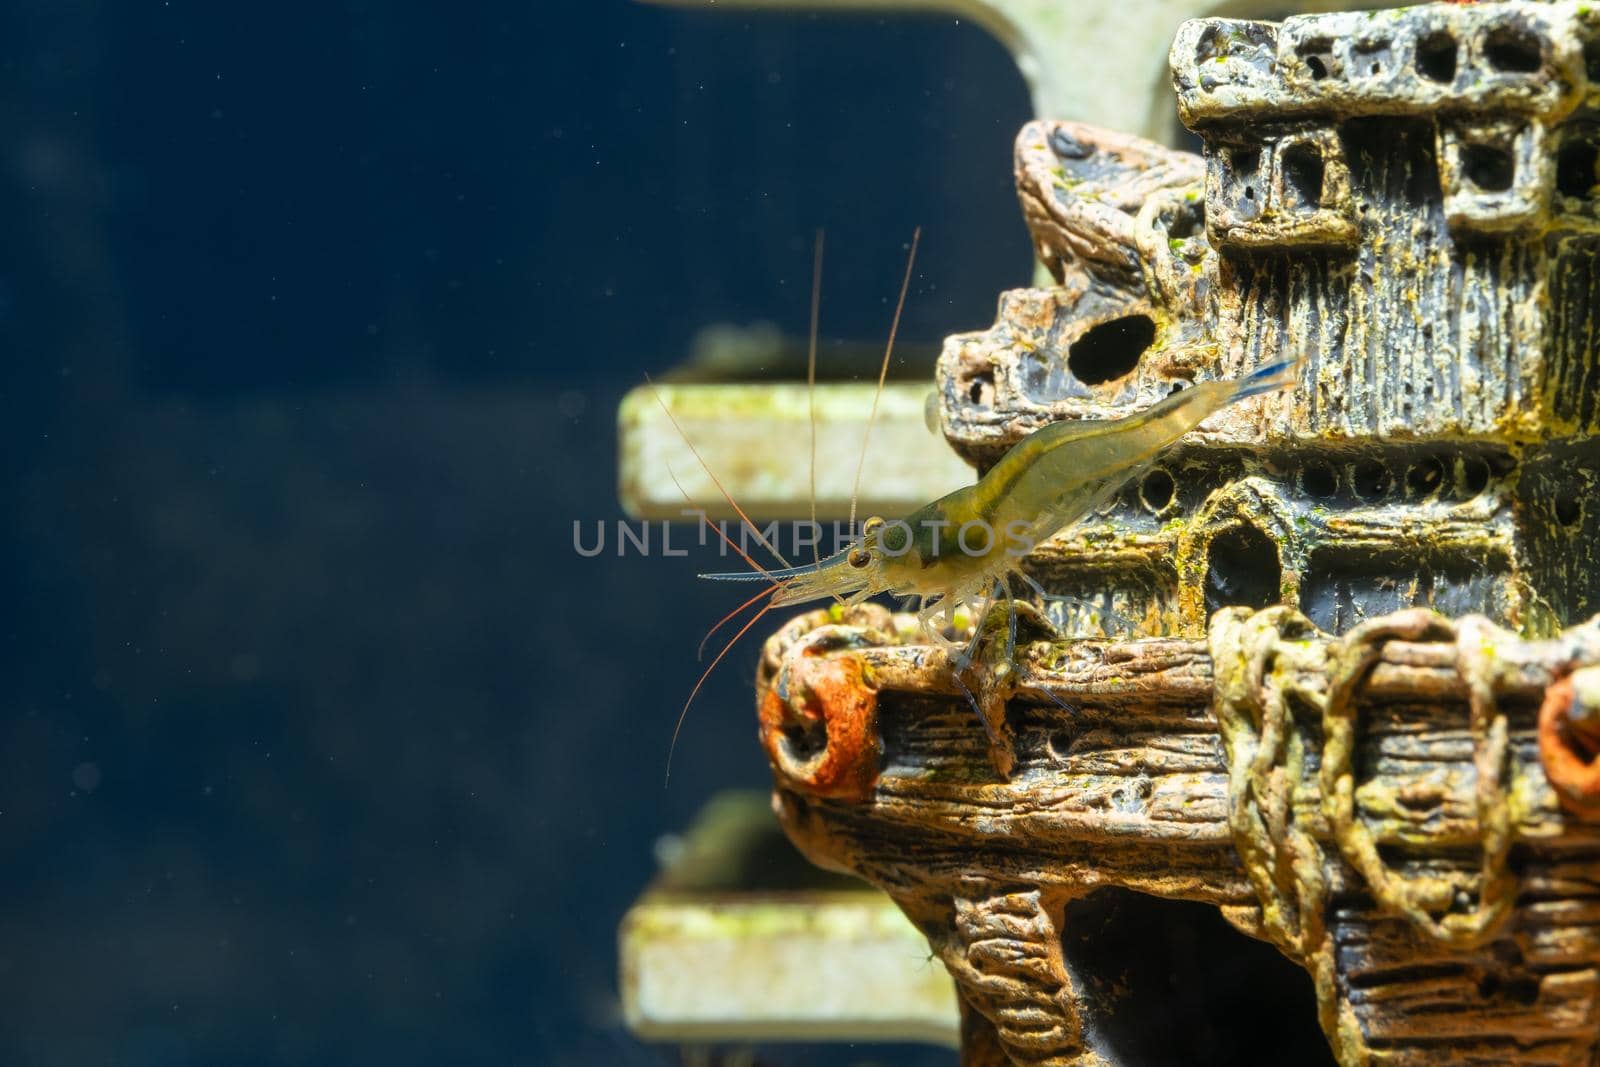 Blue leg sulawesi dwarf shrimp stay on shrimp decoration and look to back in freshwater aquarium tank.